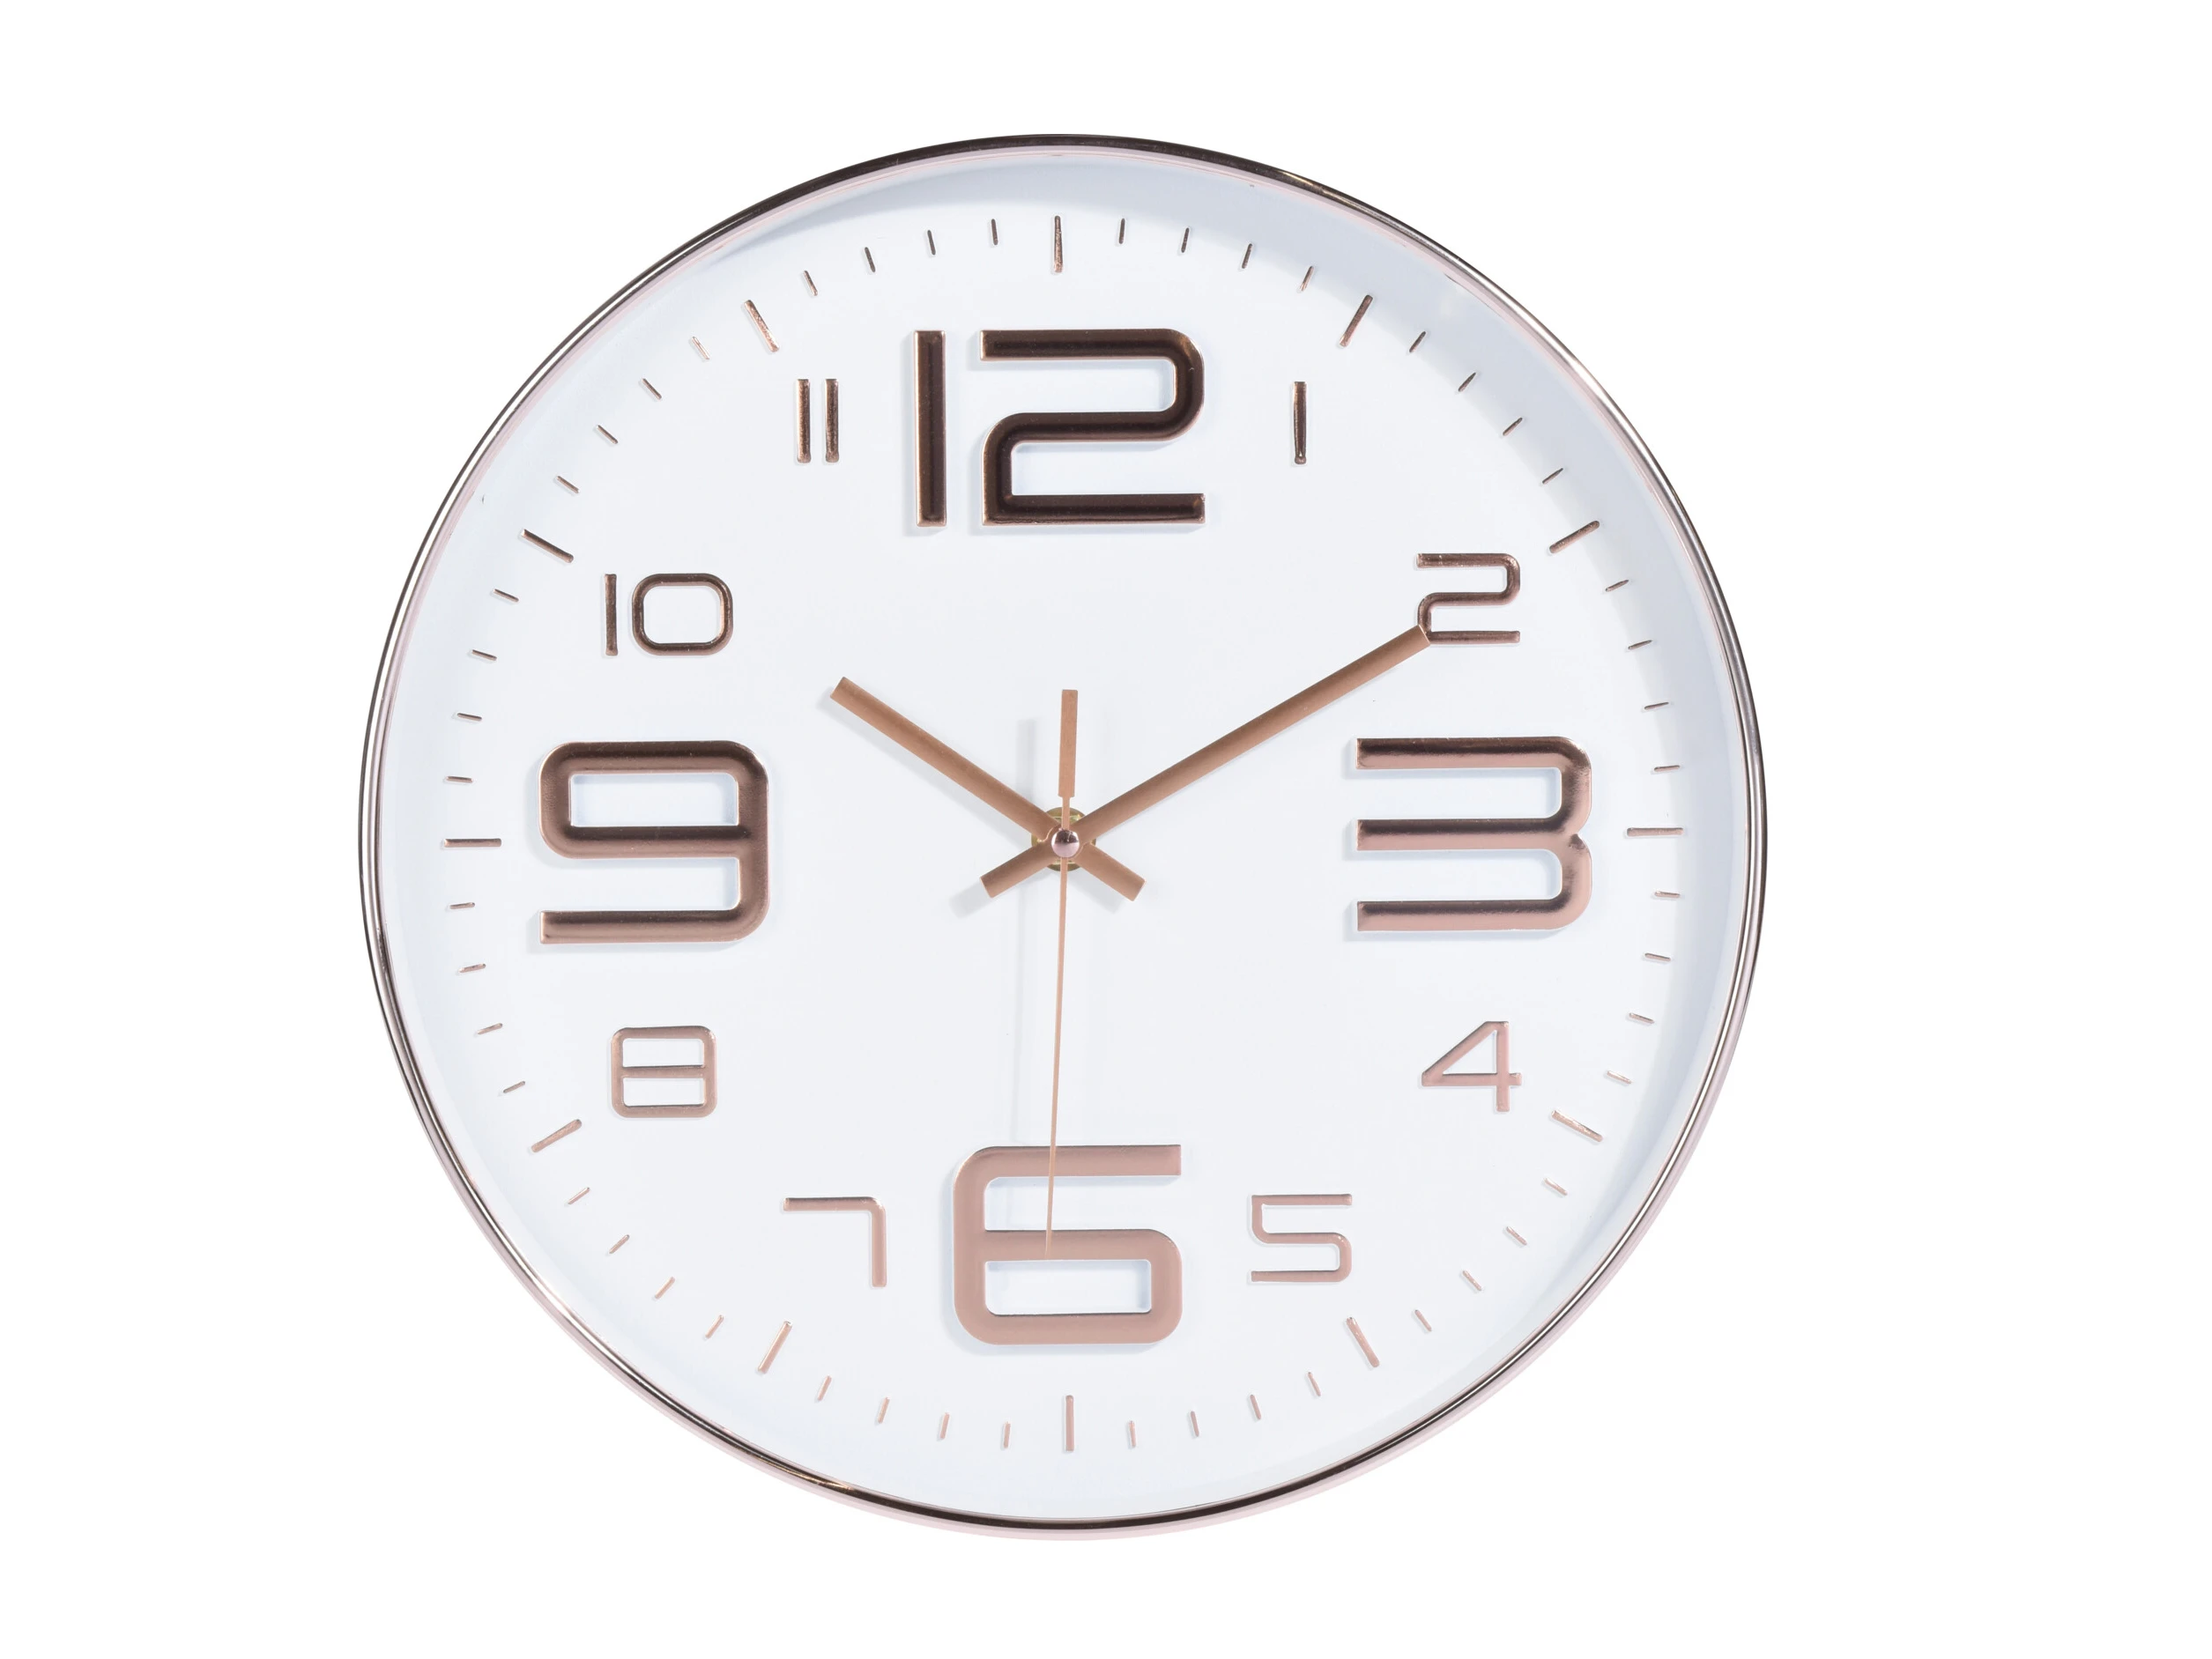 Настенные часы для прихожей - купить настенные часы для прихожей в Москве, цена в каталоге интернет-магазина